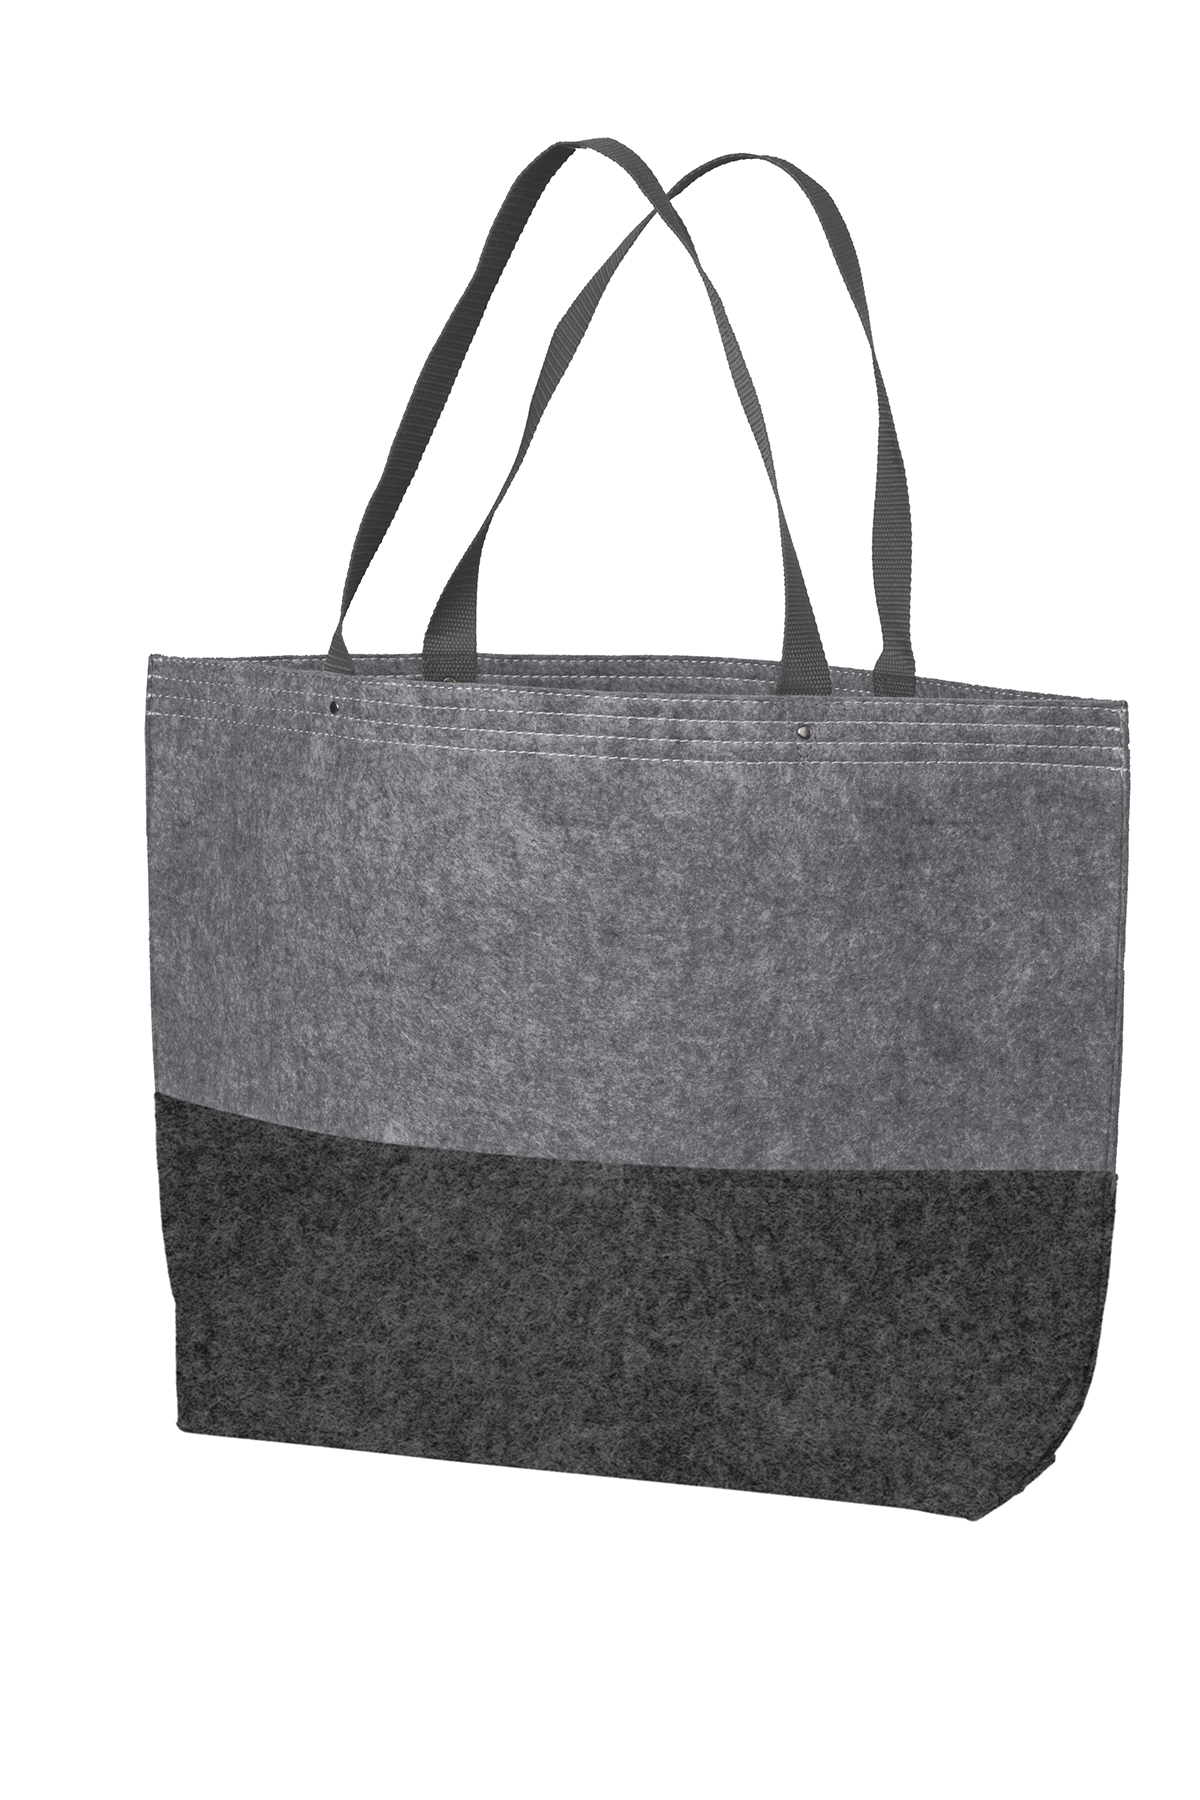 Banfield Tote Bag for Sale by o2creativeNY